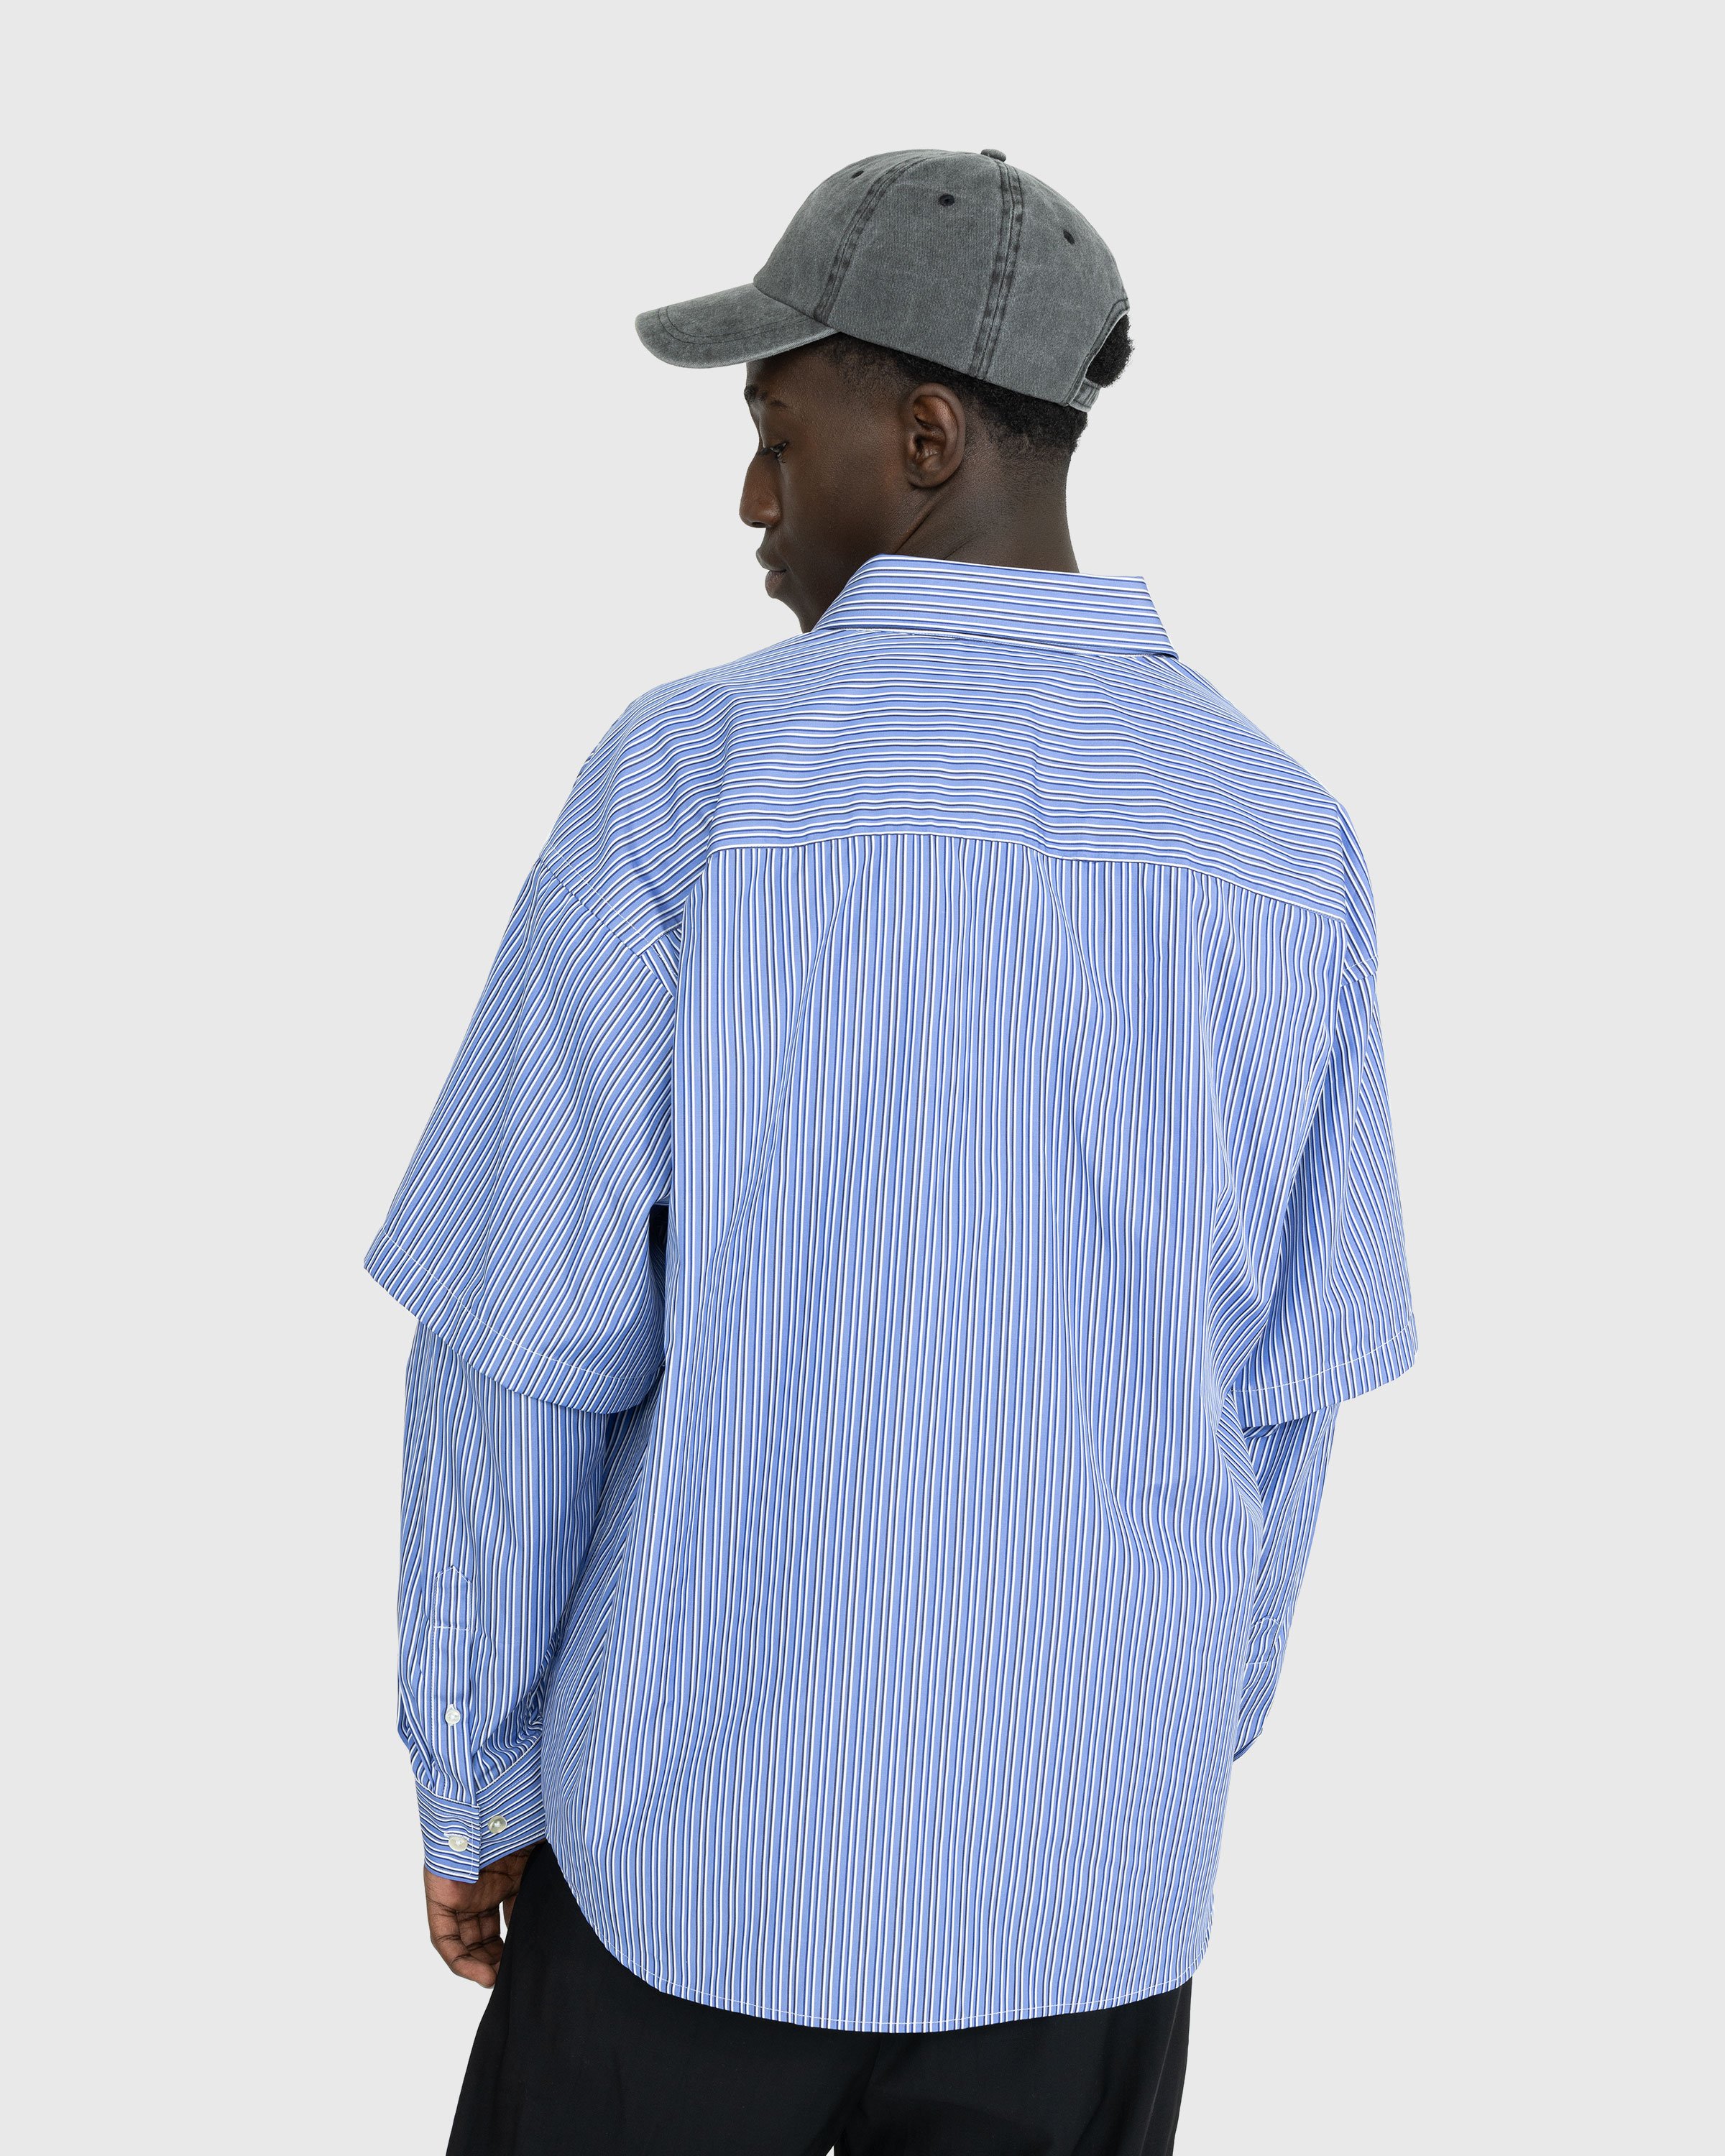 Highsnobiety x Le Père - "Neu York Neu York" Double Sleeve Shirt - Clothing - Blue - Image 4